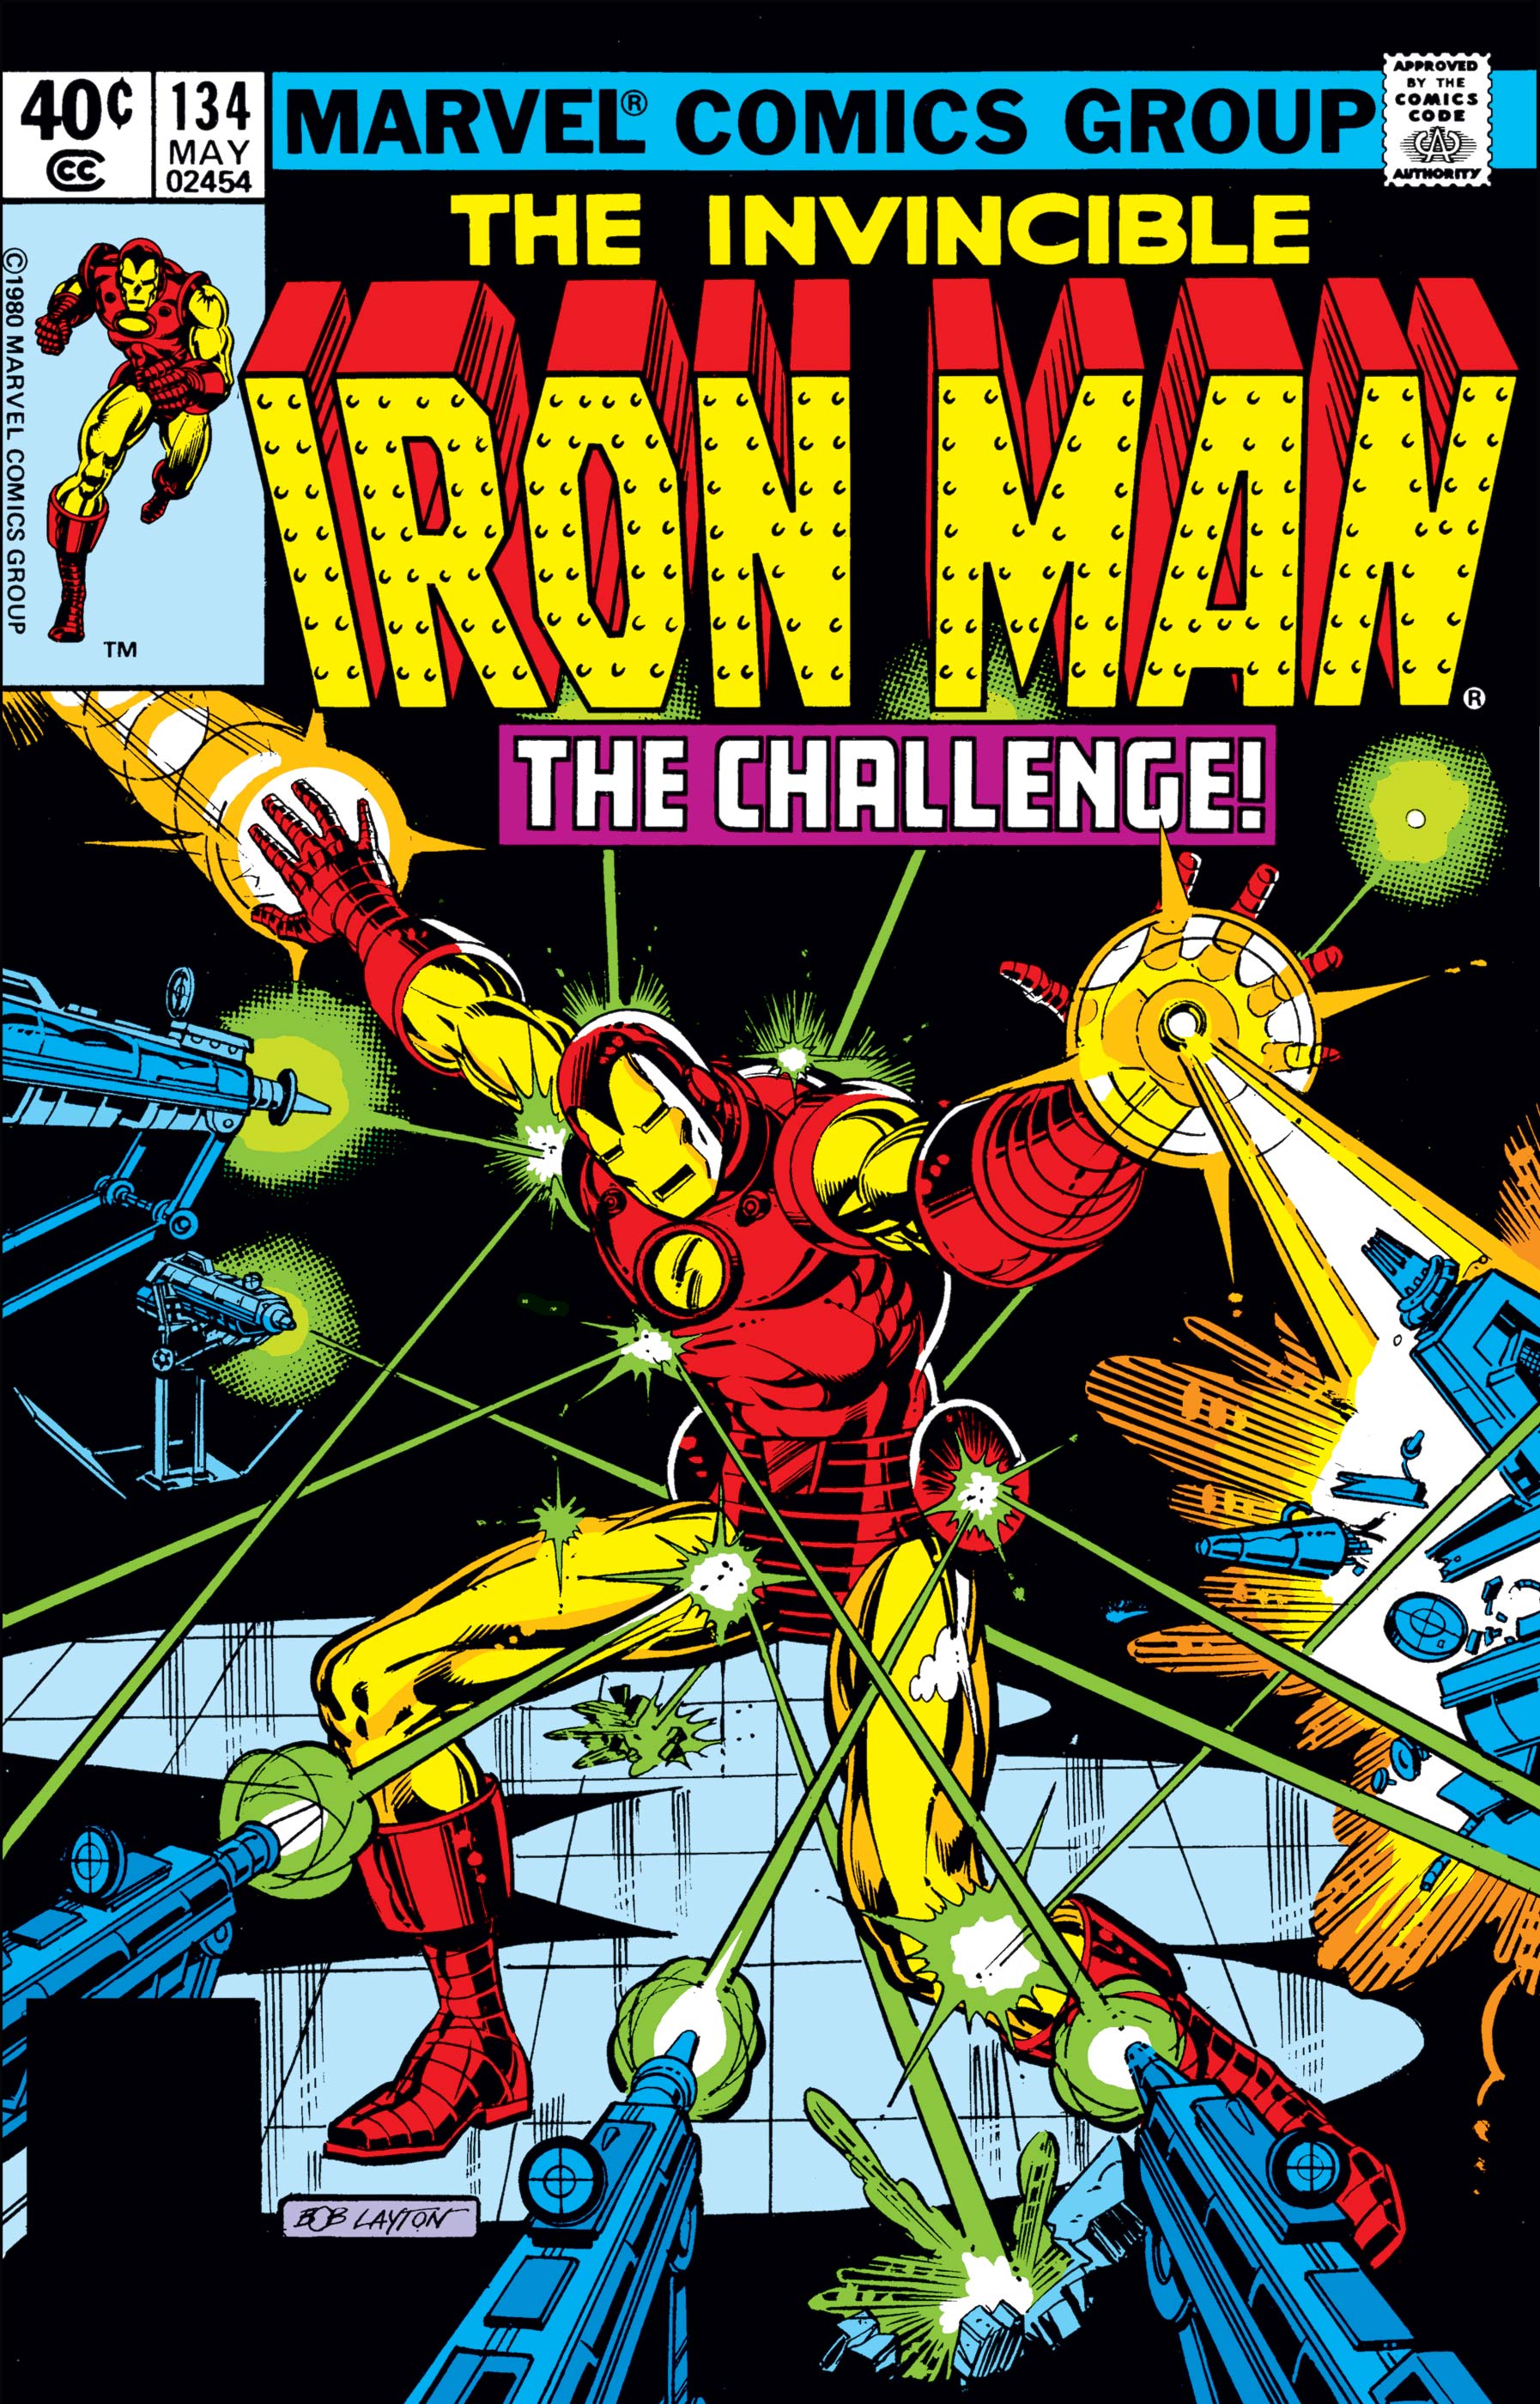 Iron Man (1968) #134